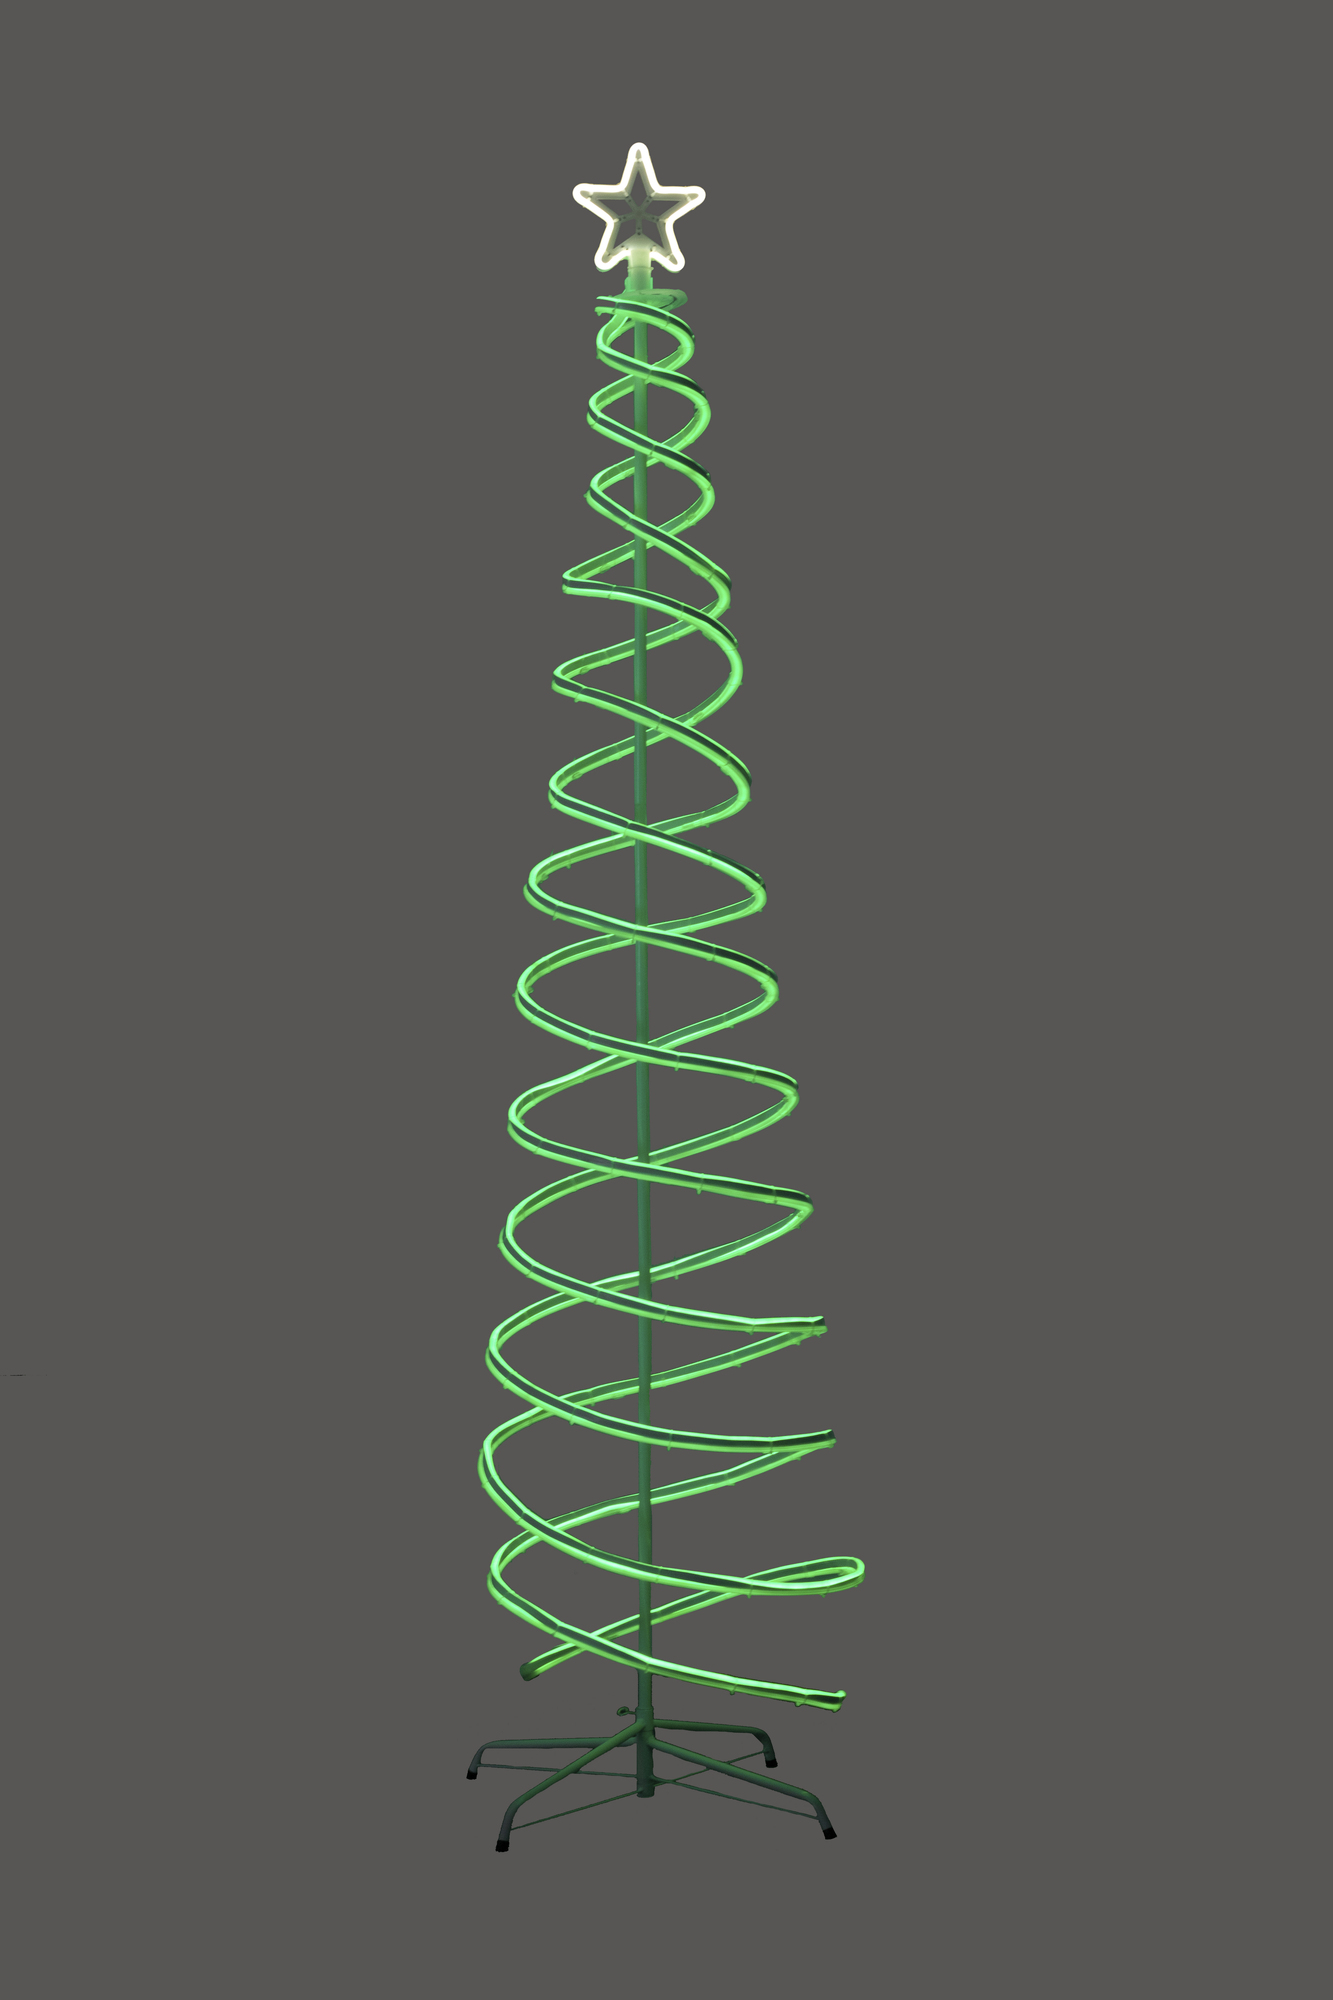 spiral christmas tree design